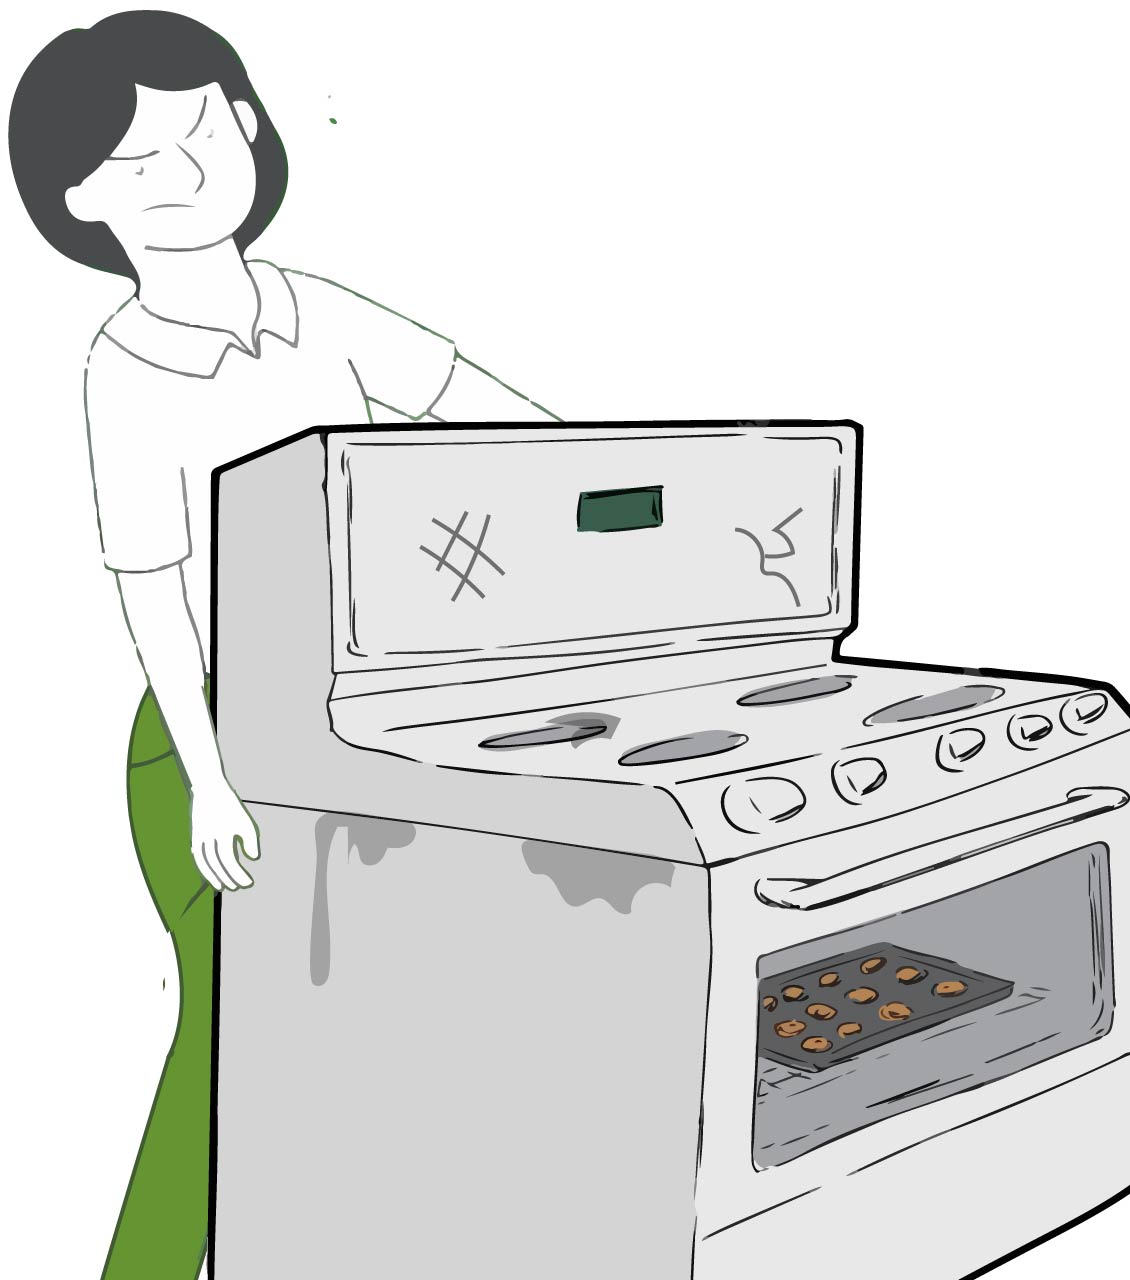 Nashville oven removal services